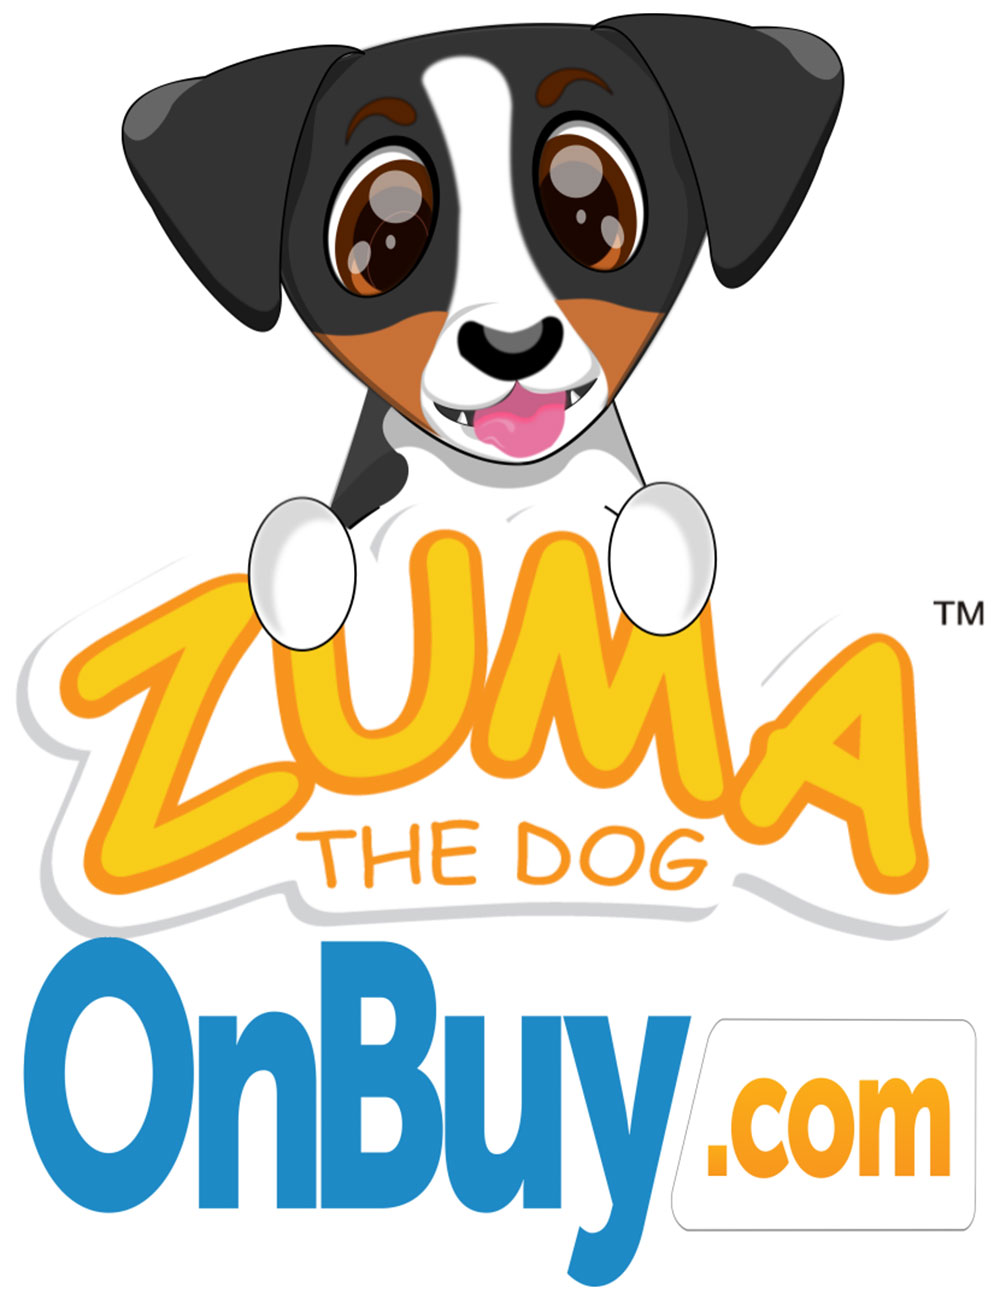 Zuma the dog cartoon image